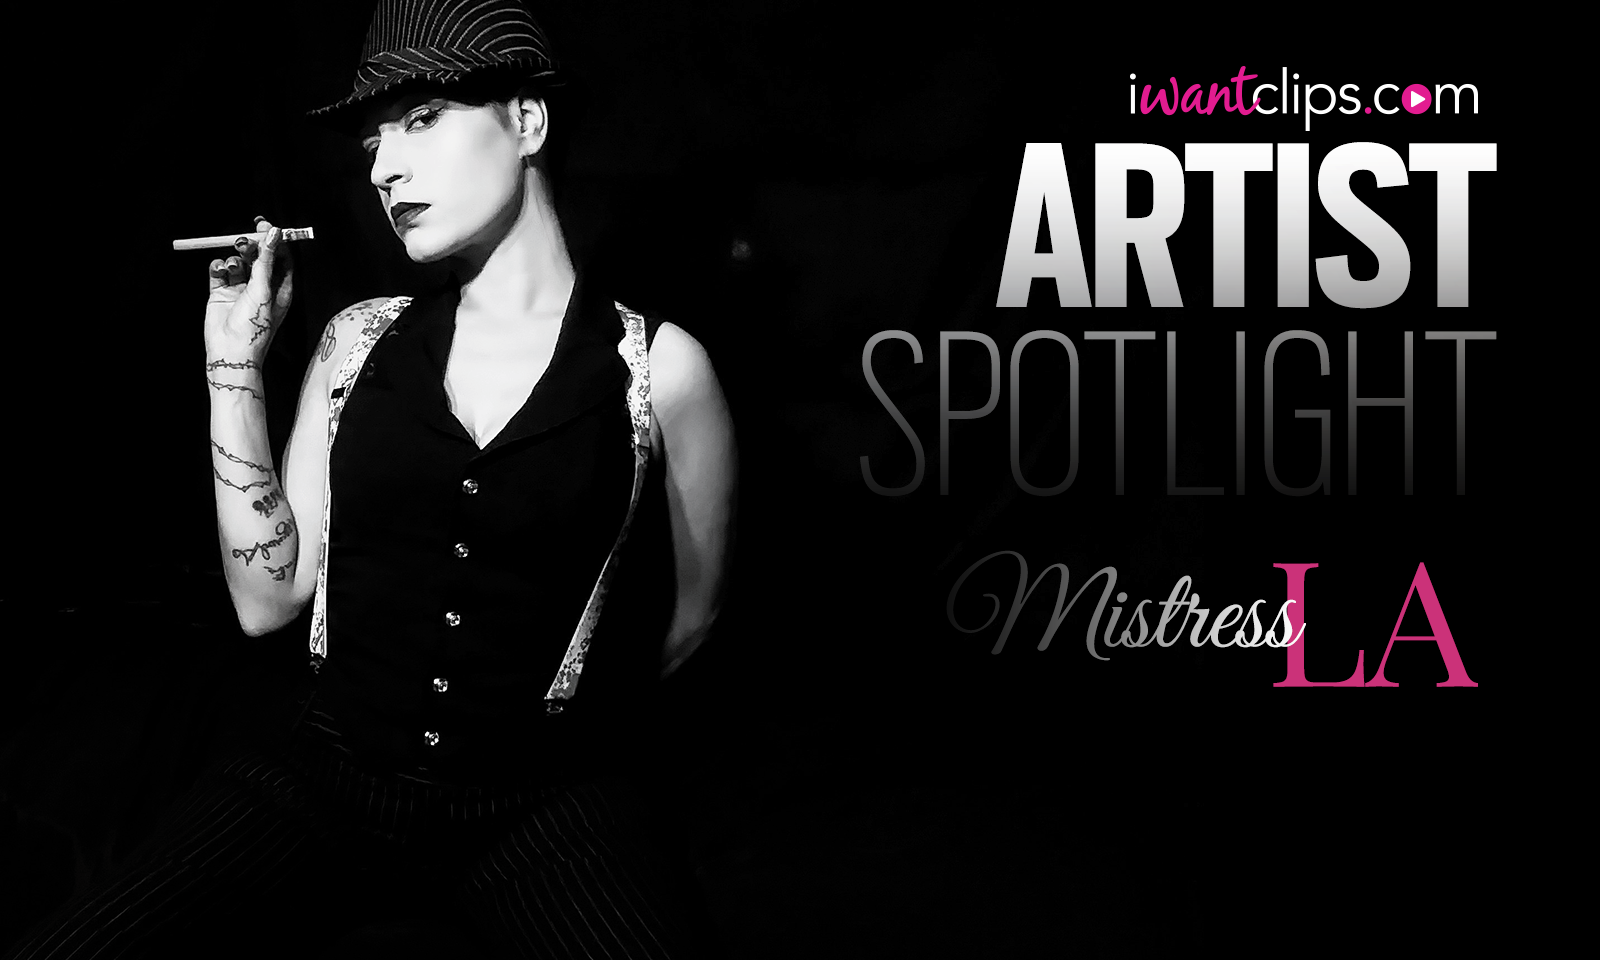 Mistress LA Commands the Artist Spotlight on iWantClips